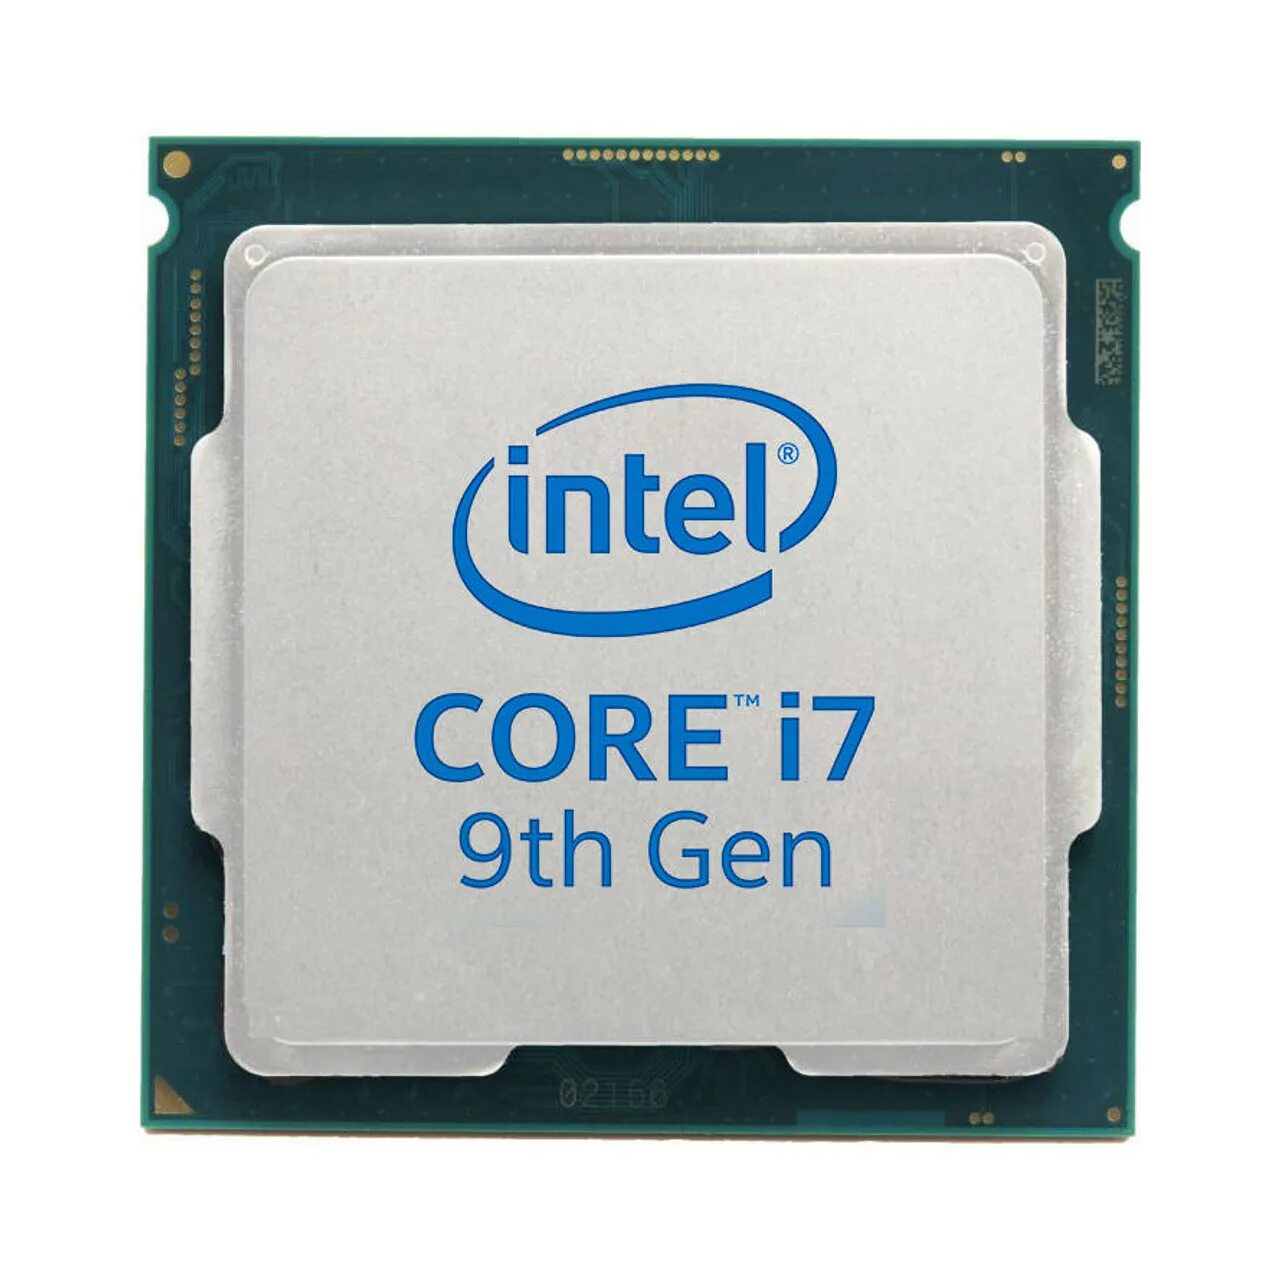 Интел коре ай7. Процессор Intel Core i4. Процессор Intel Core i7-9700k. Intel Core 7 9700k. Процессор Intel Core OEM l7-9700.